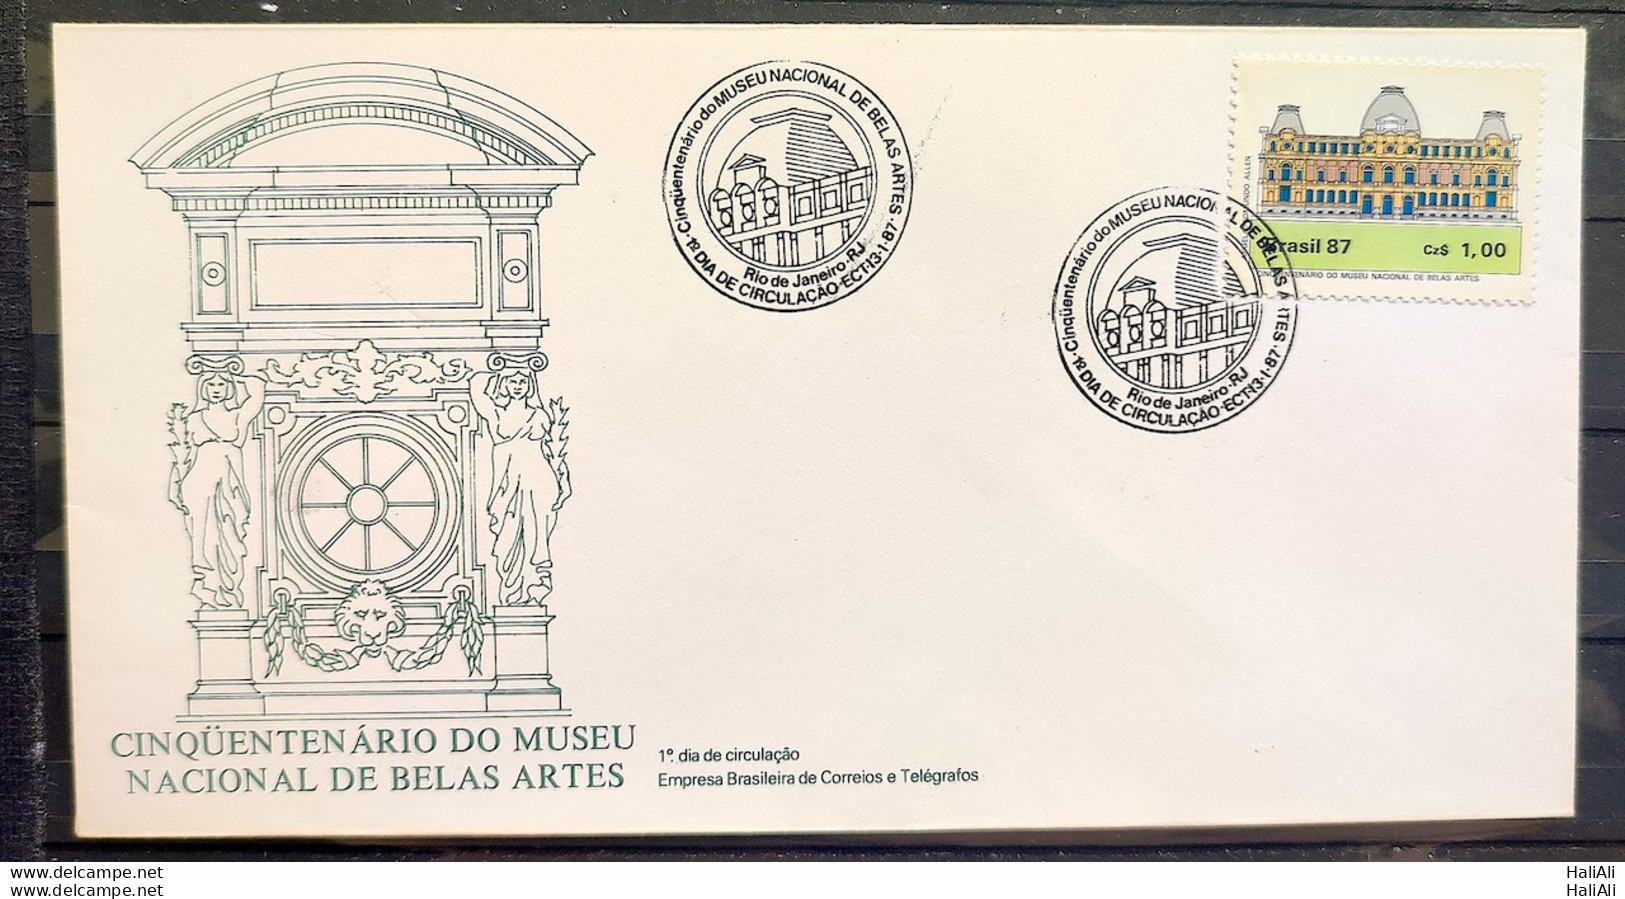 Brazil Envelope FDC 415 1987 Museum Fine Arts CBC RJ 2 - FDC